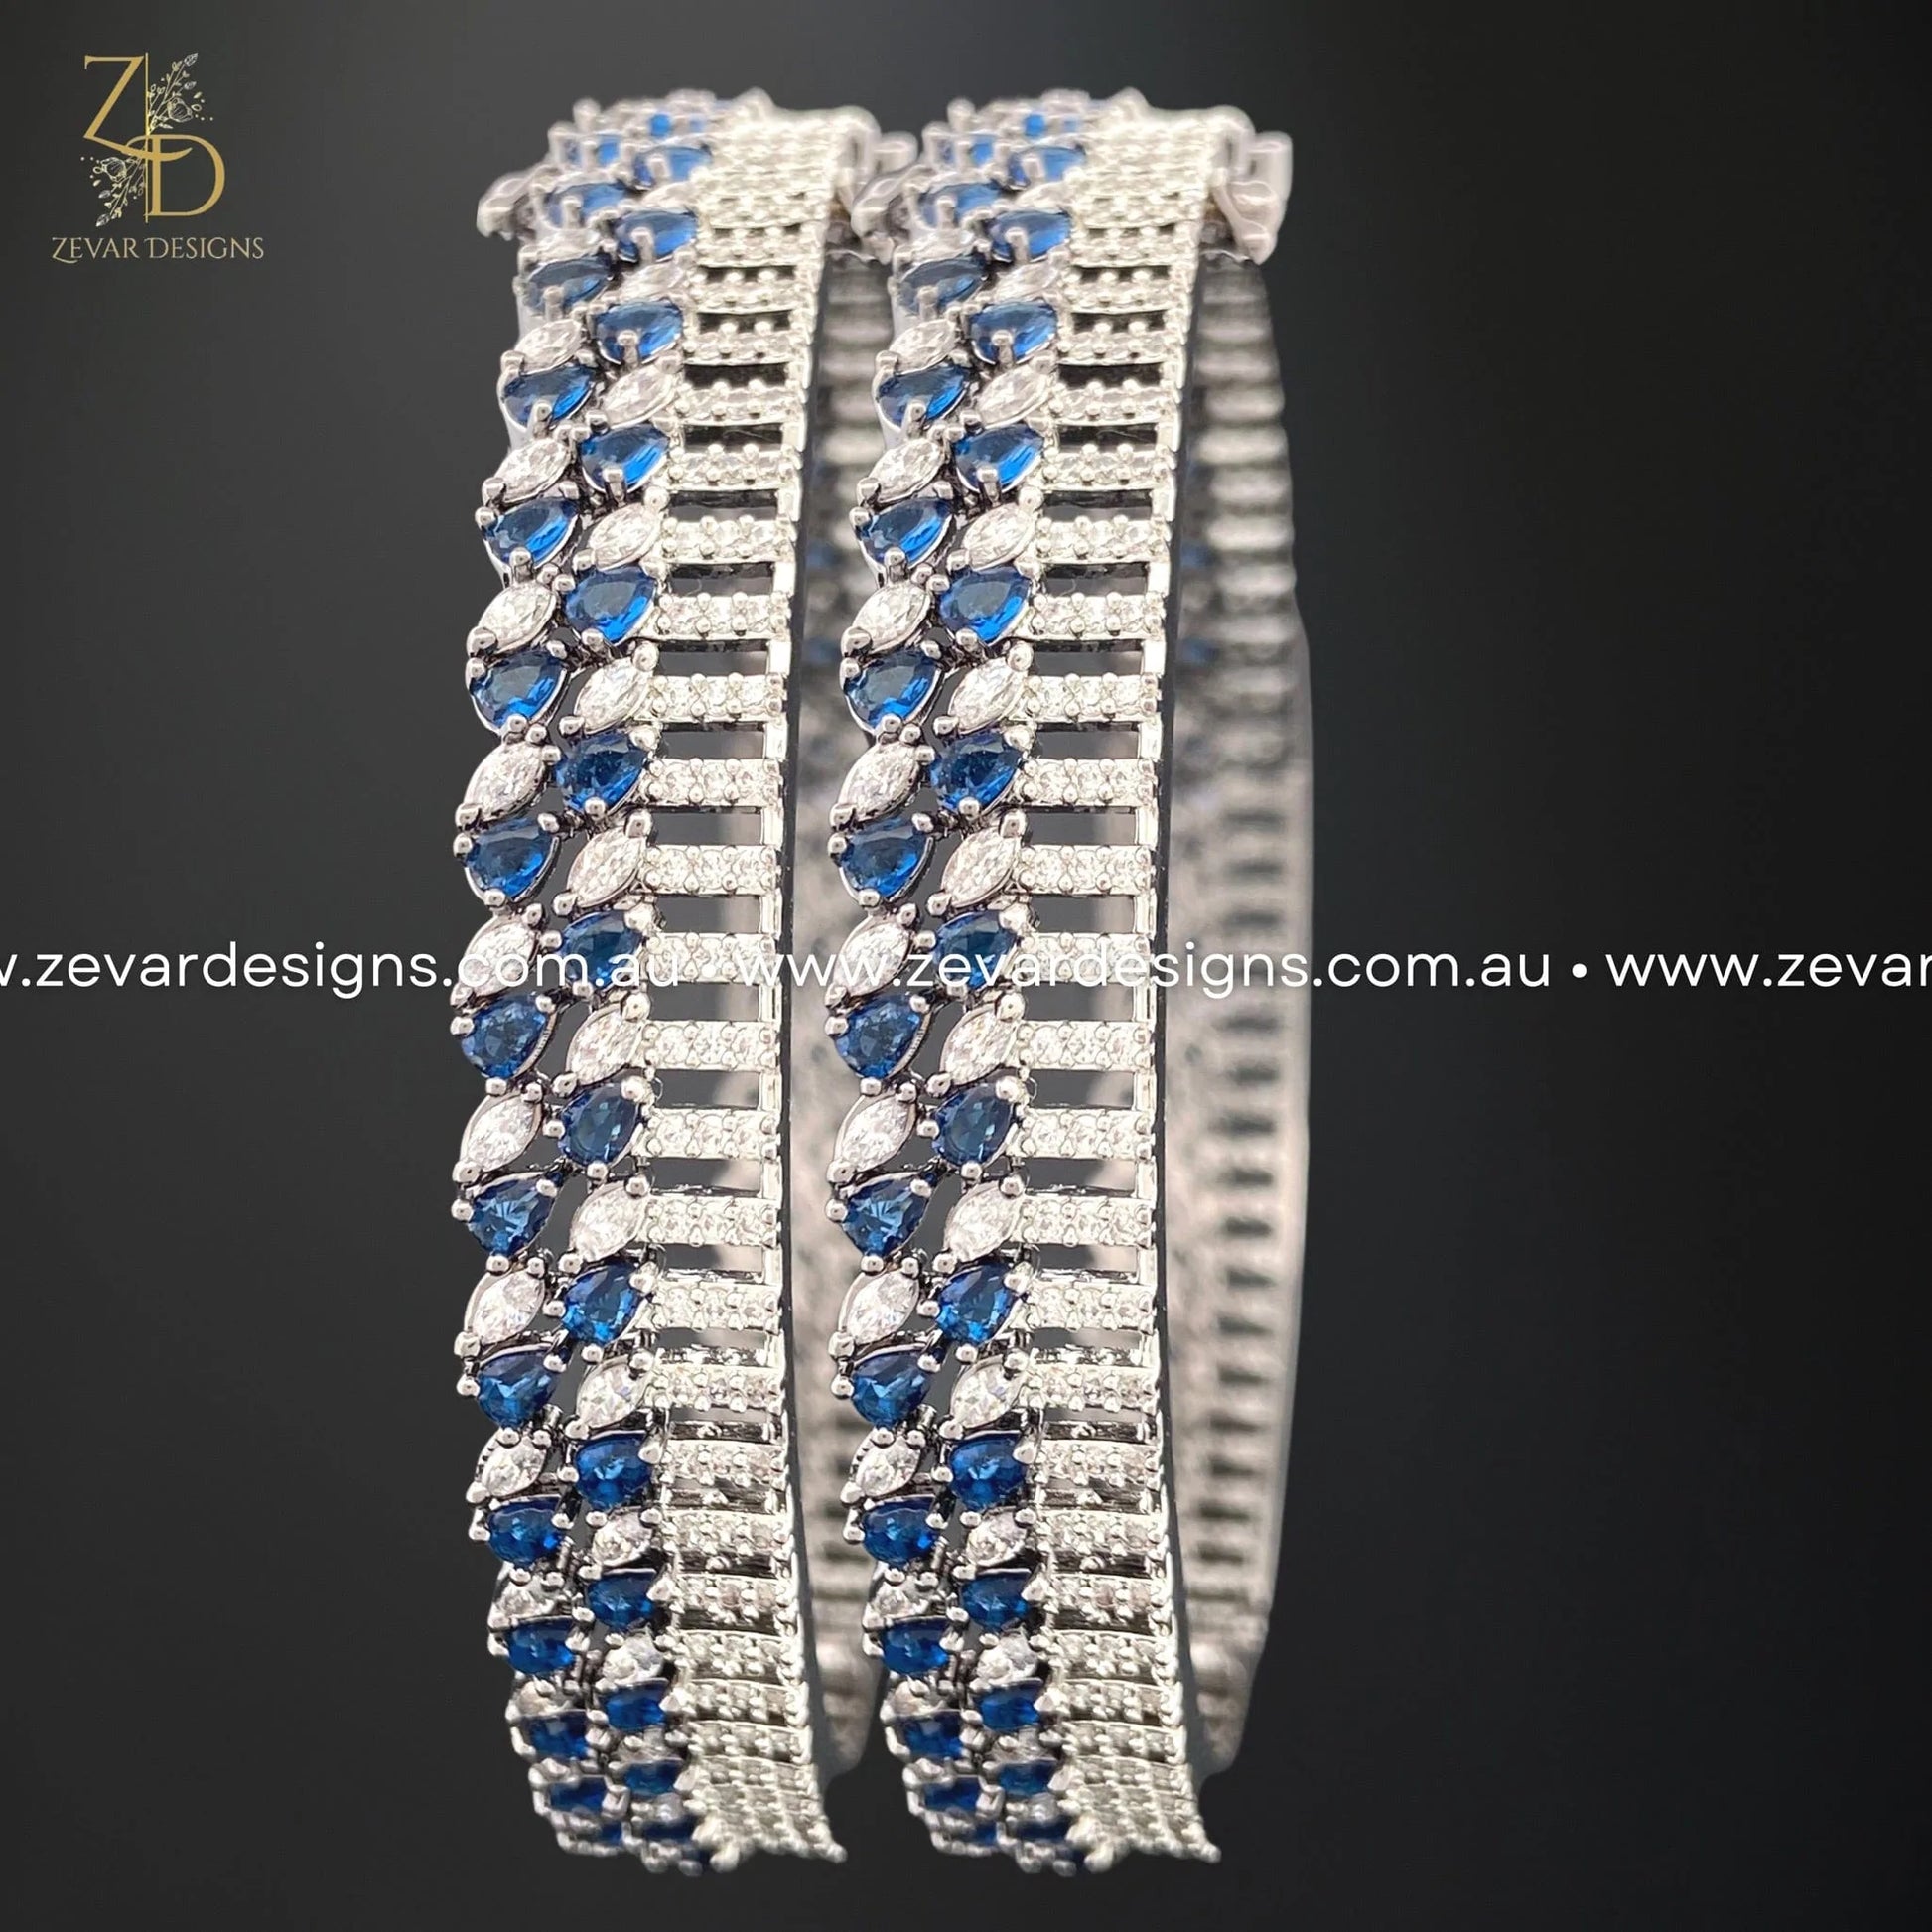 Zevar Designs Bangles & Bracelets - AD AD/Zircon Bangles in Black Rhodium - Sapphire Blue